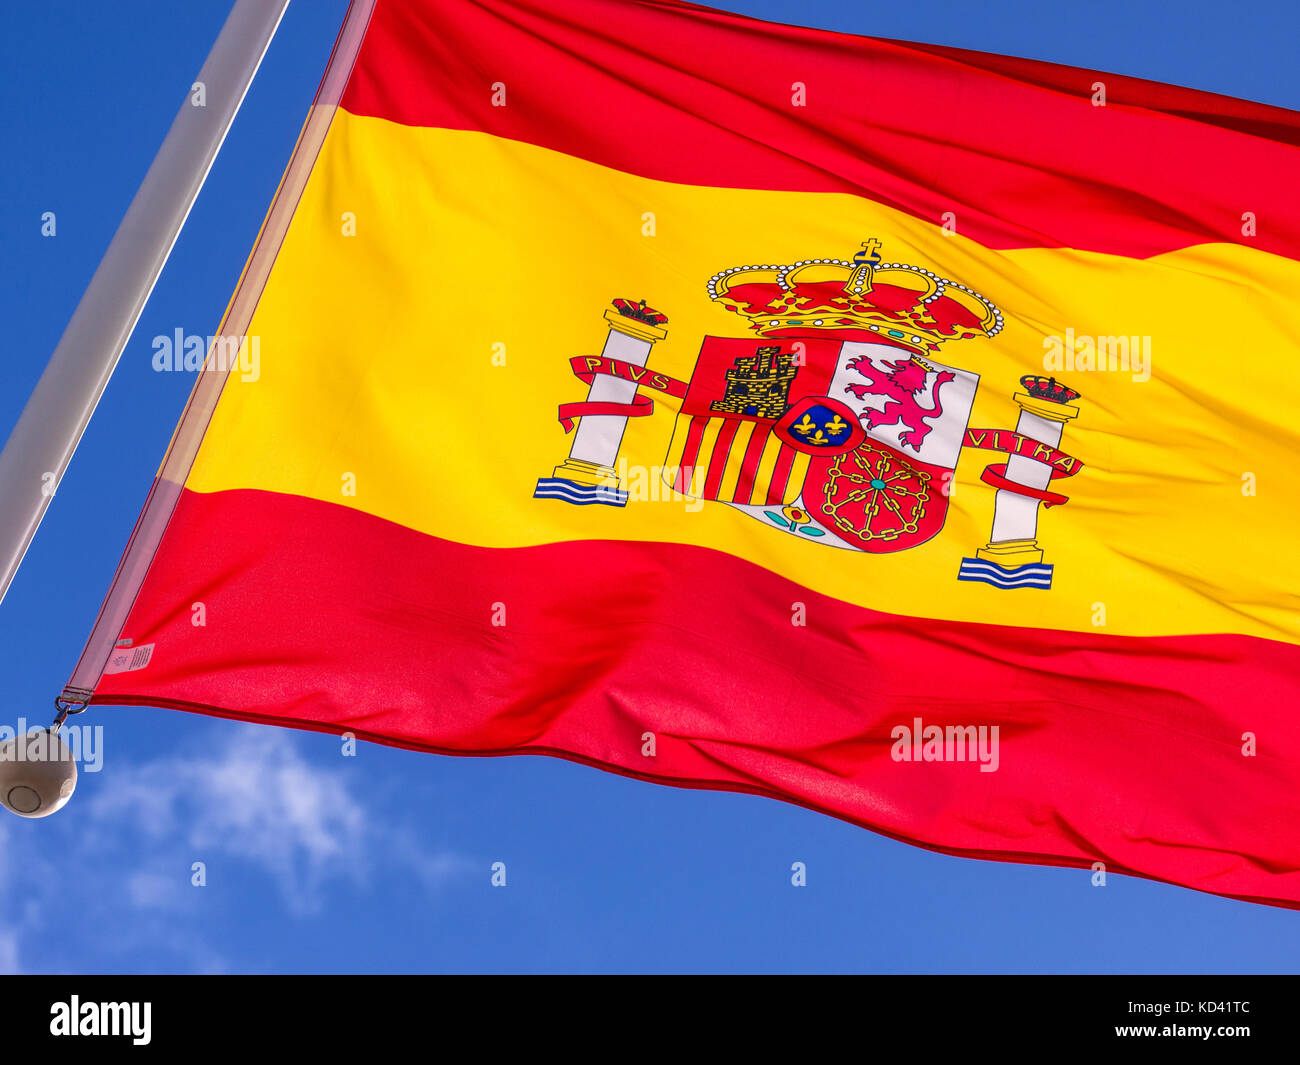 DRAPEAU ESPAGNOL le drapeau espagnol «Bandera de España» flotte dans la brise avec un ciel bleu ensoleillé Banque D'Images